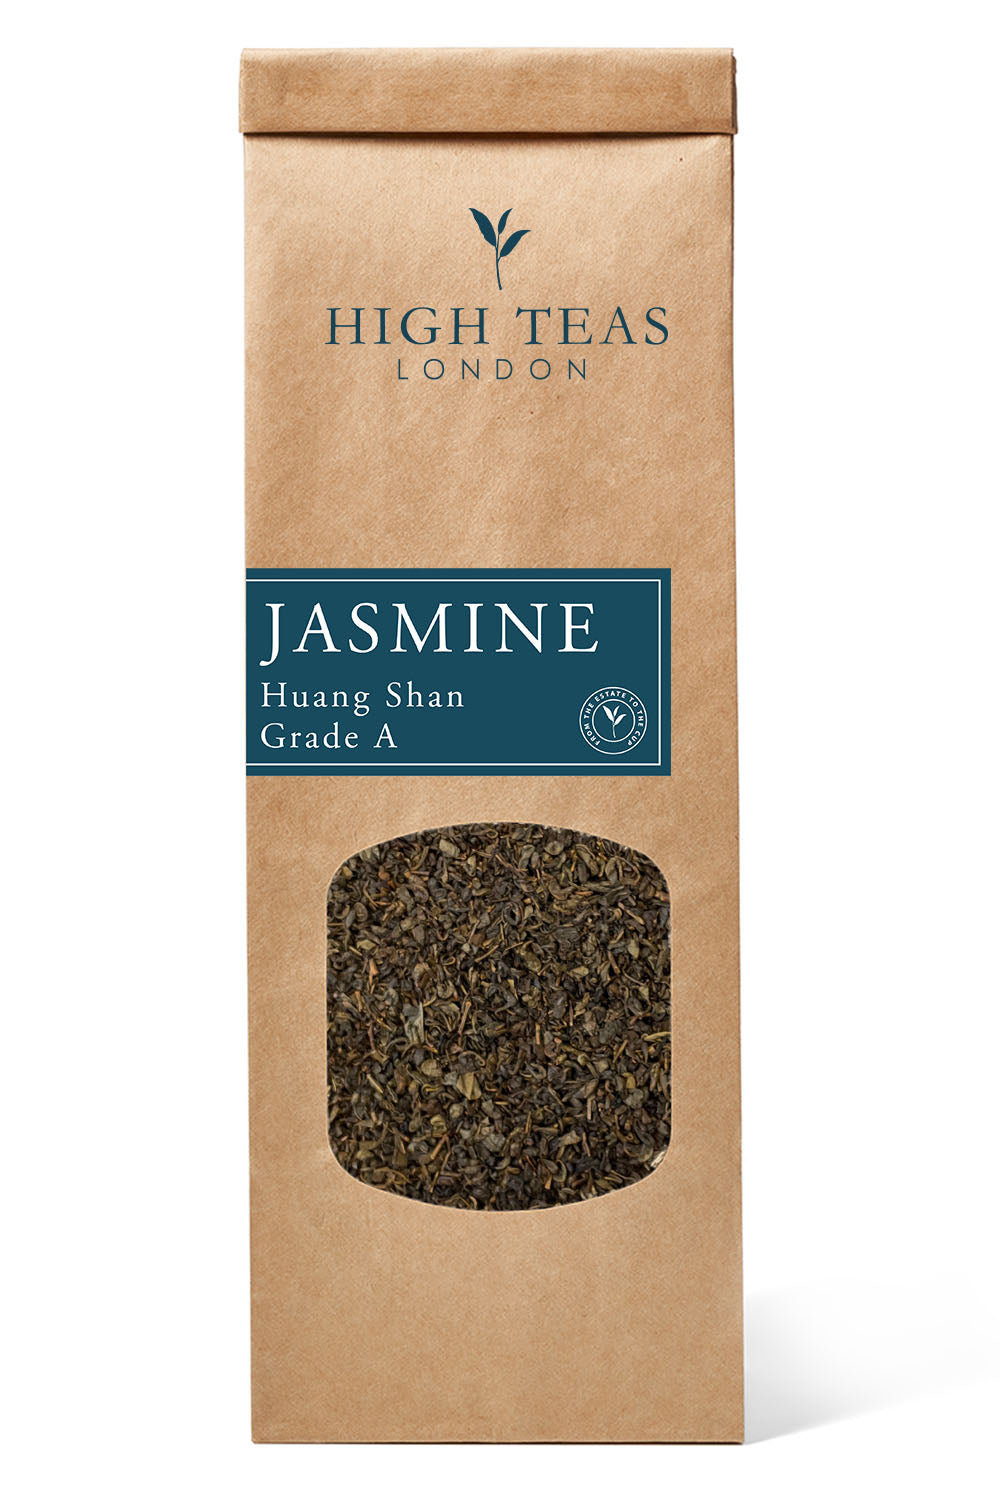 Jasmine Huang Shan Ya Grade A-50g-Loose Leaf Tea-High Teas